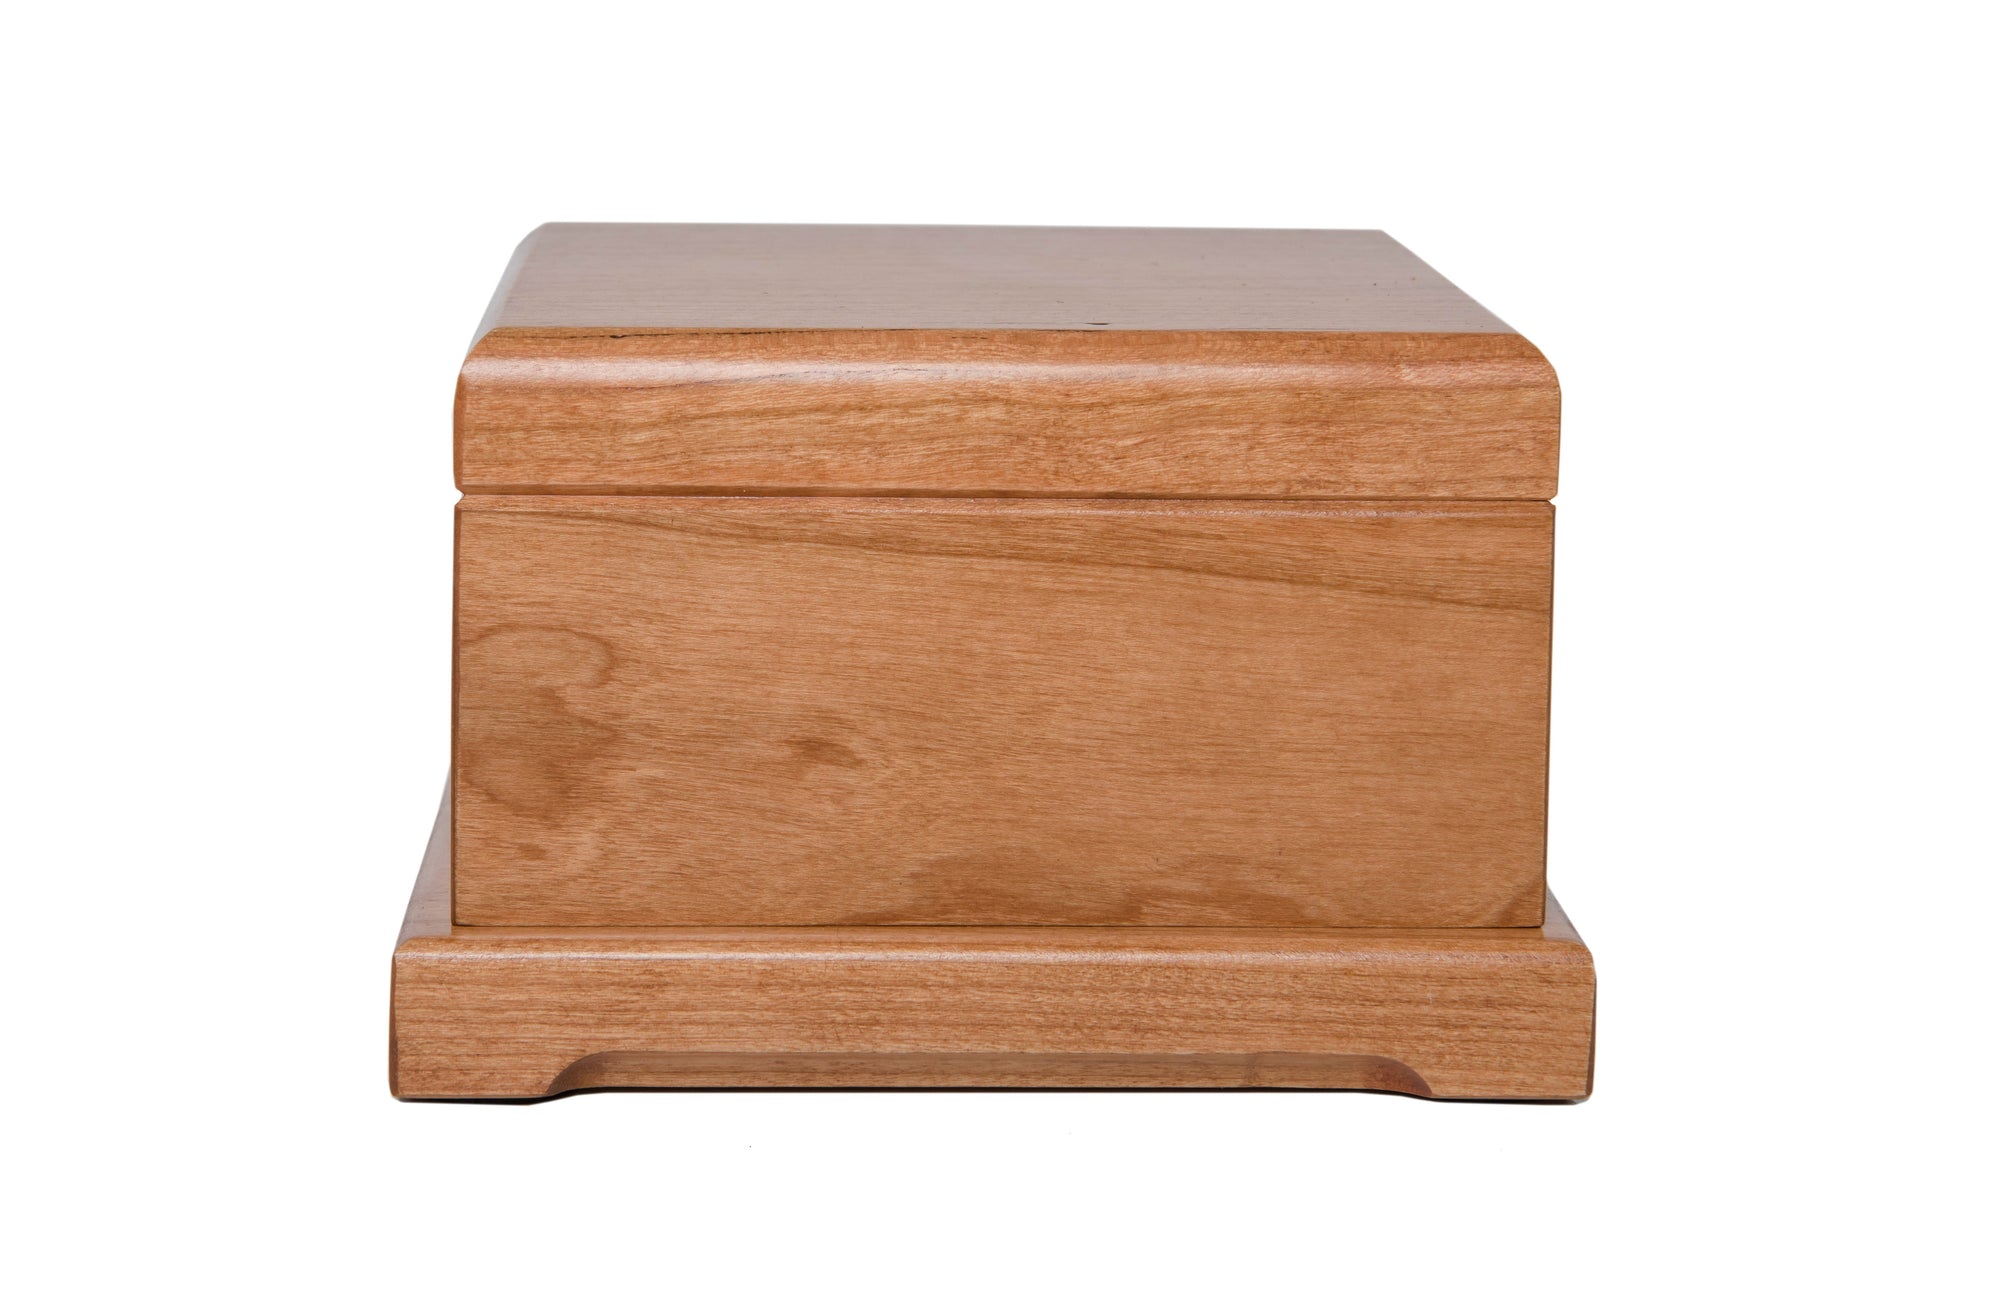 Pet Memorial Keepsake Urn Box for Dog or Cat - Your Light Shines